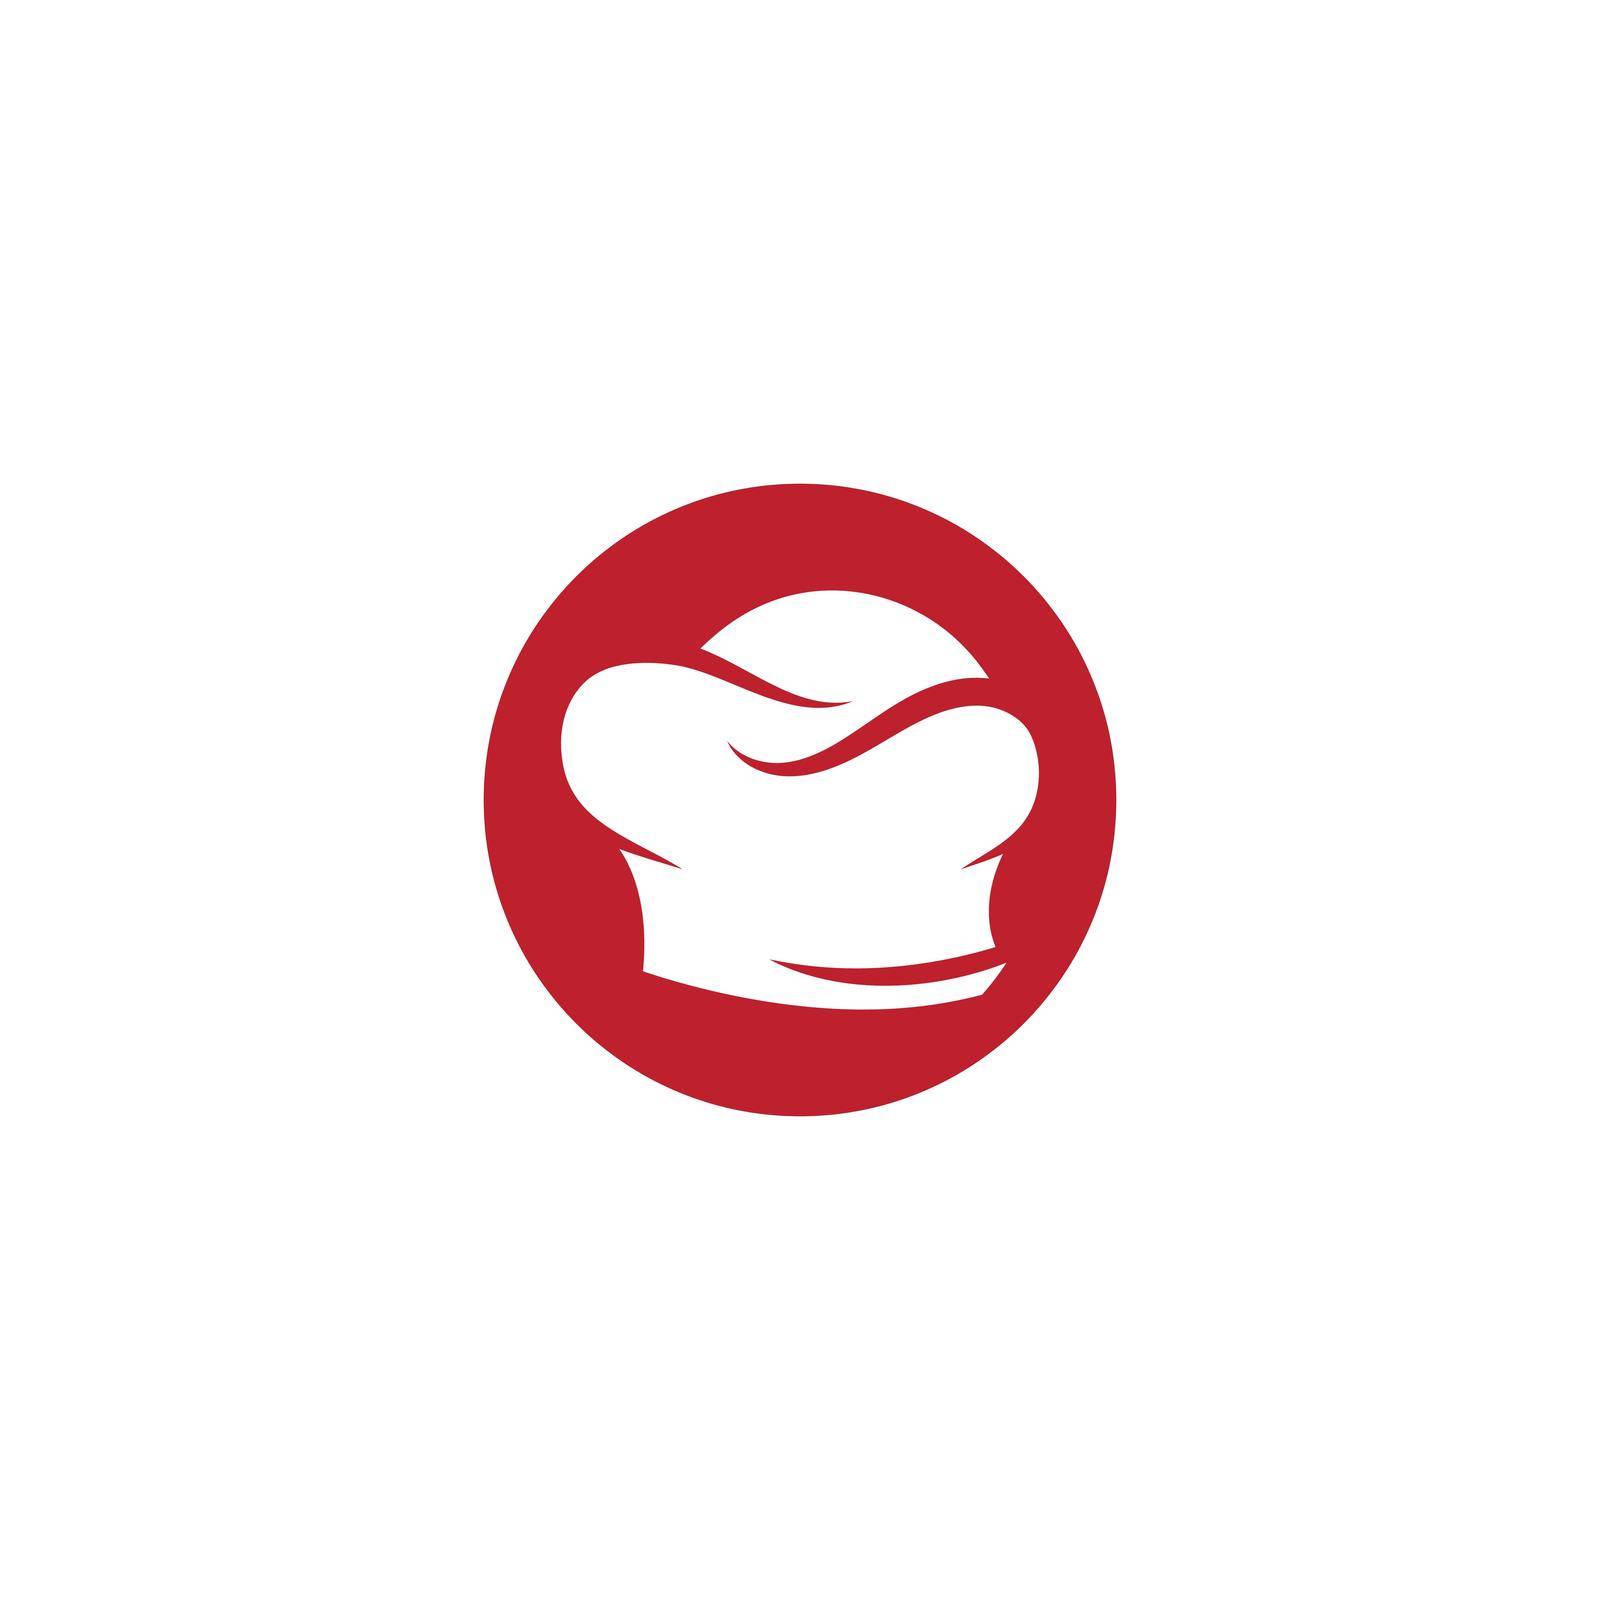 Chef hat logo template vector icon